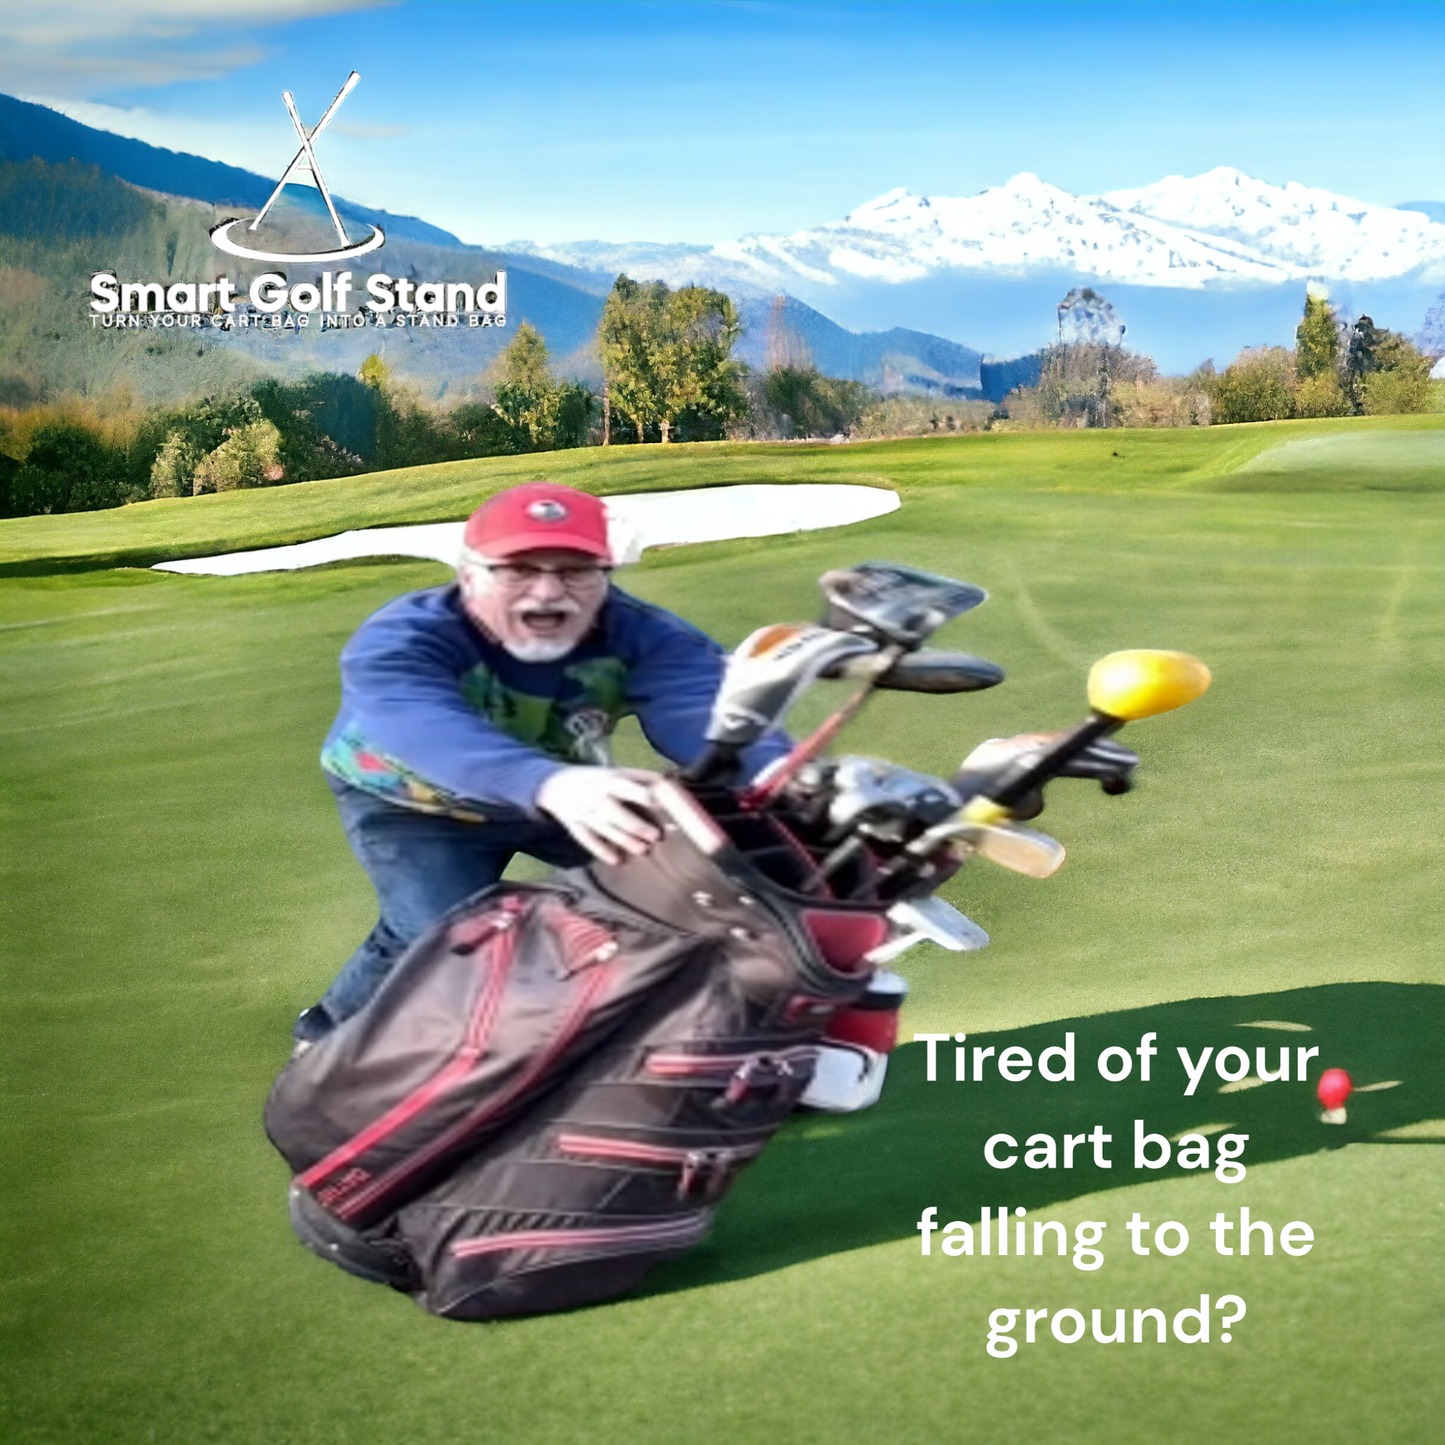 Smart Golf Stand 2.0